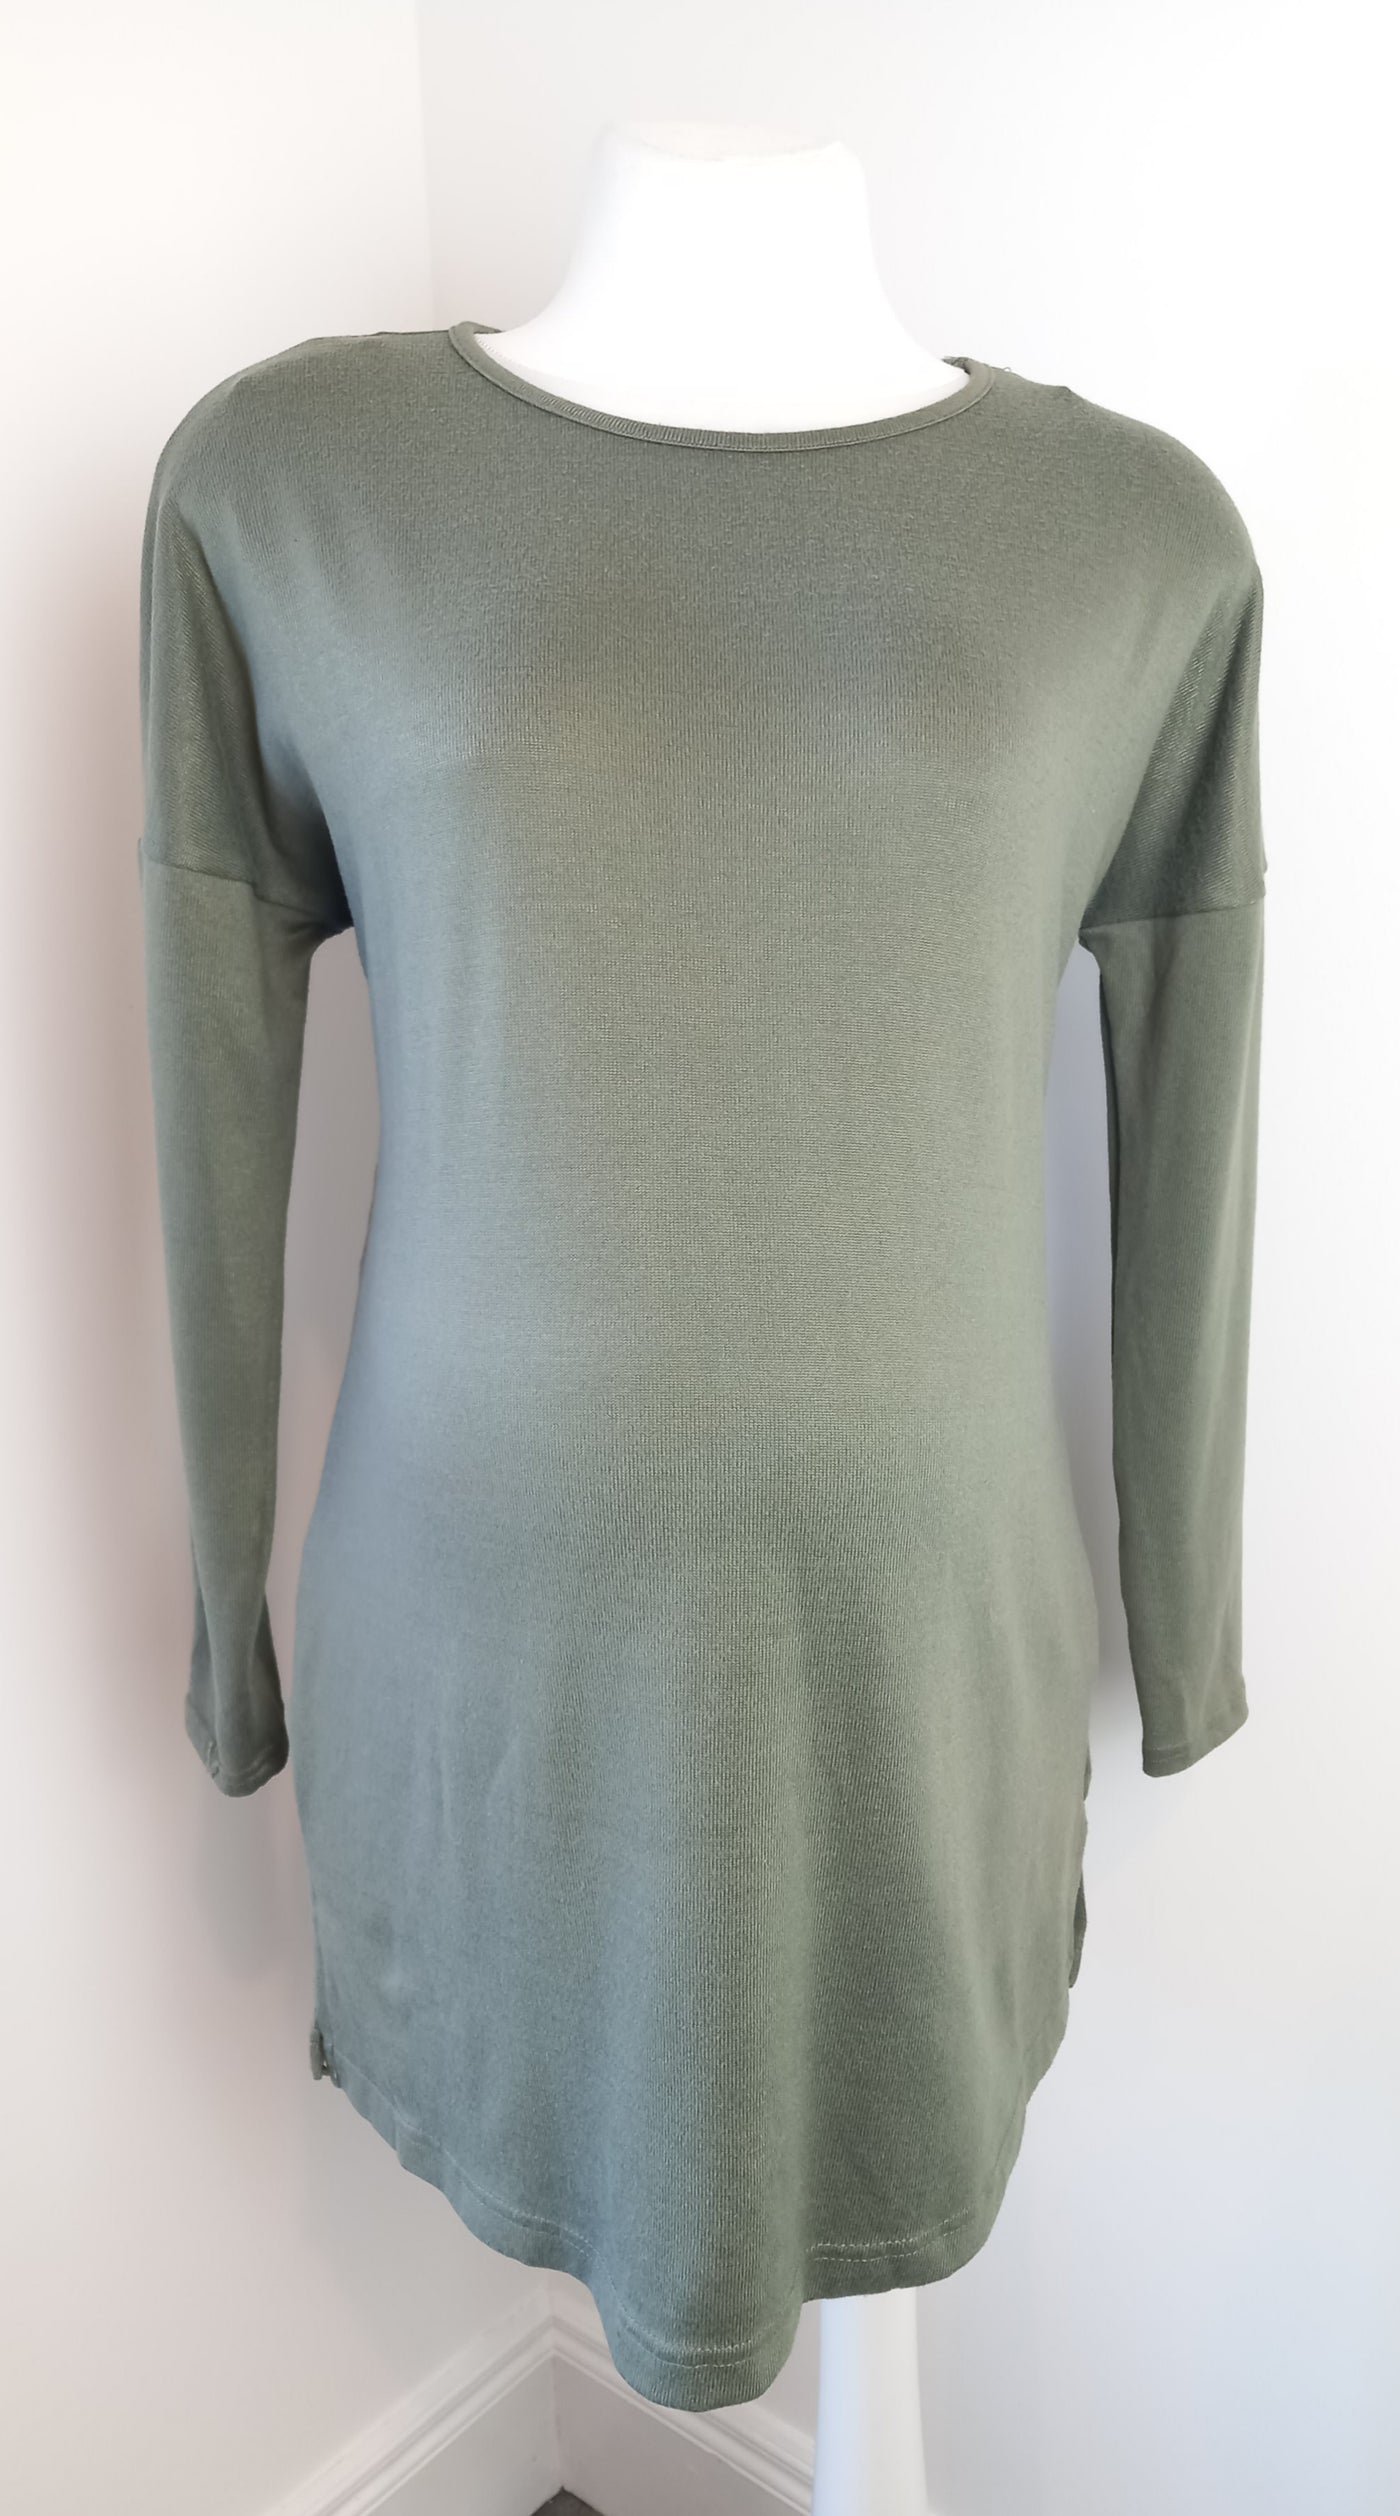 New Look Maternity khaki green light jumper - Size 10